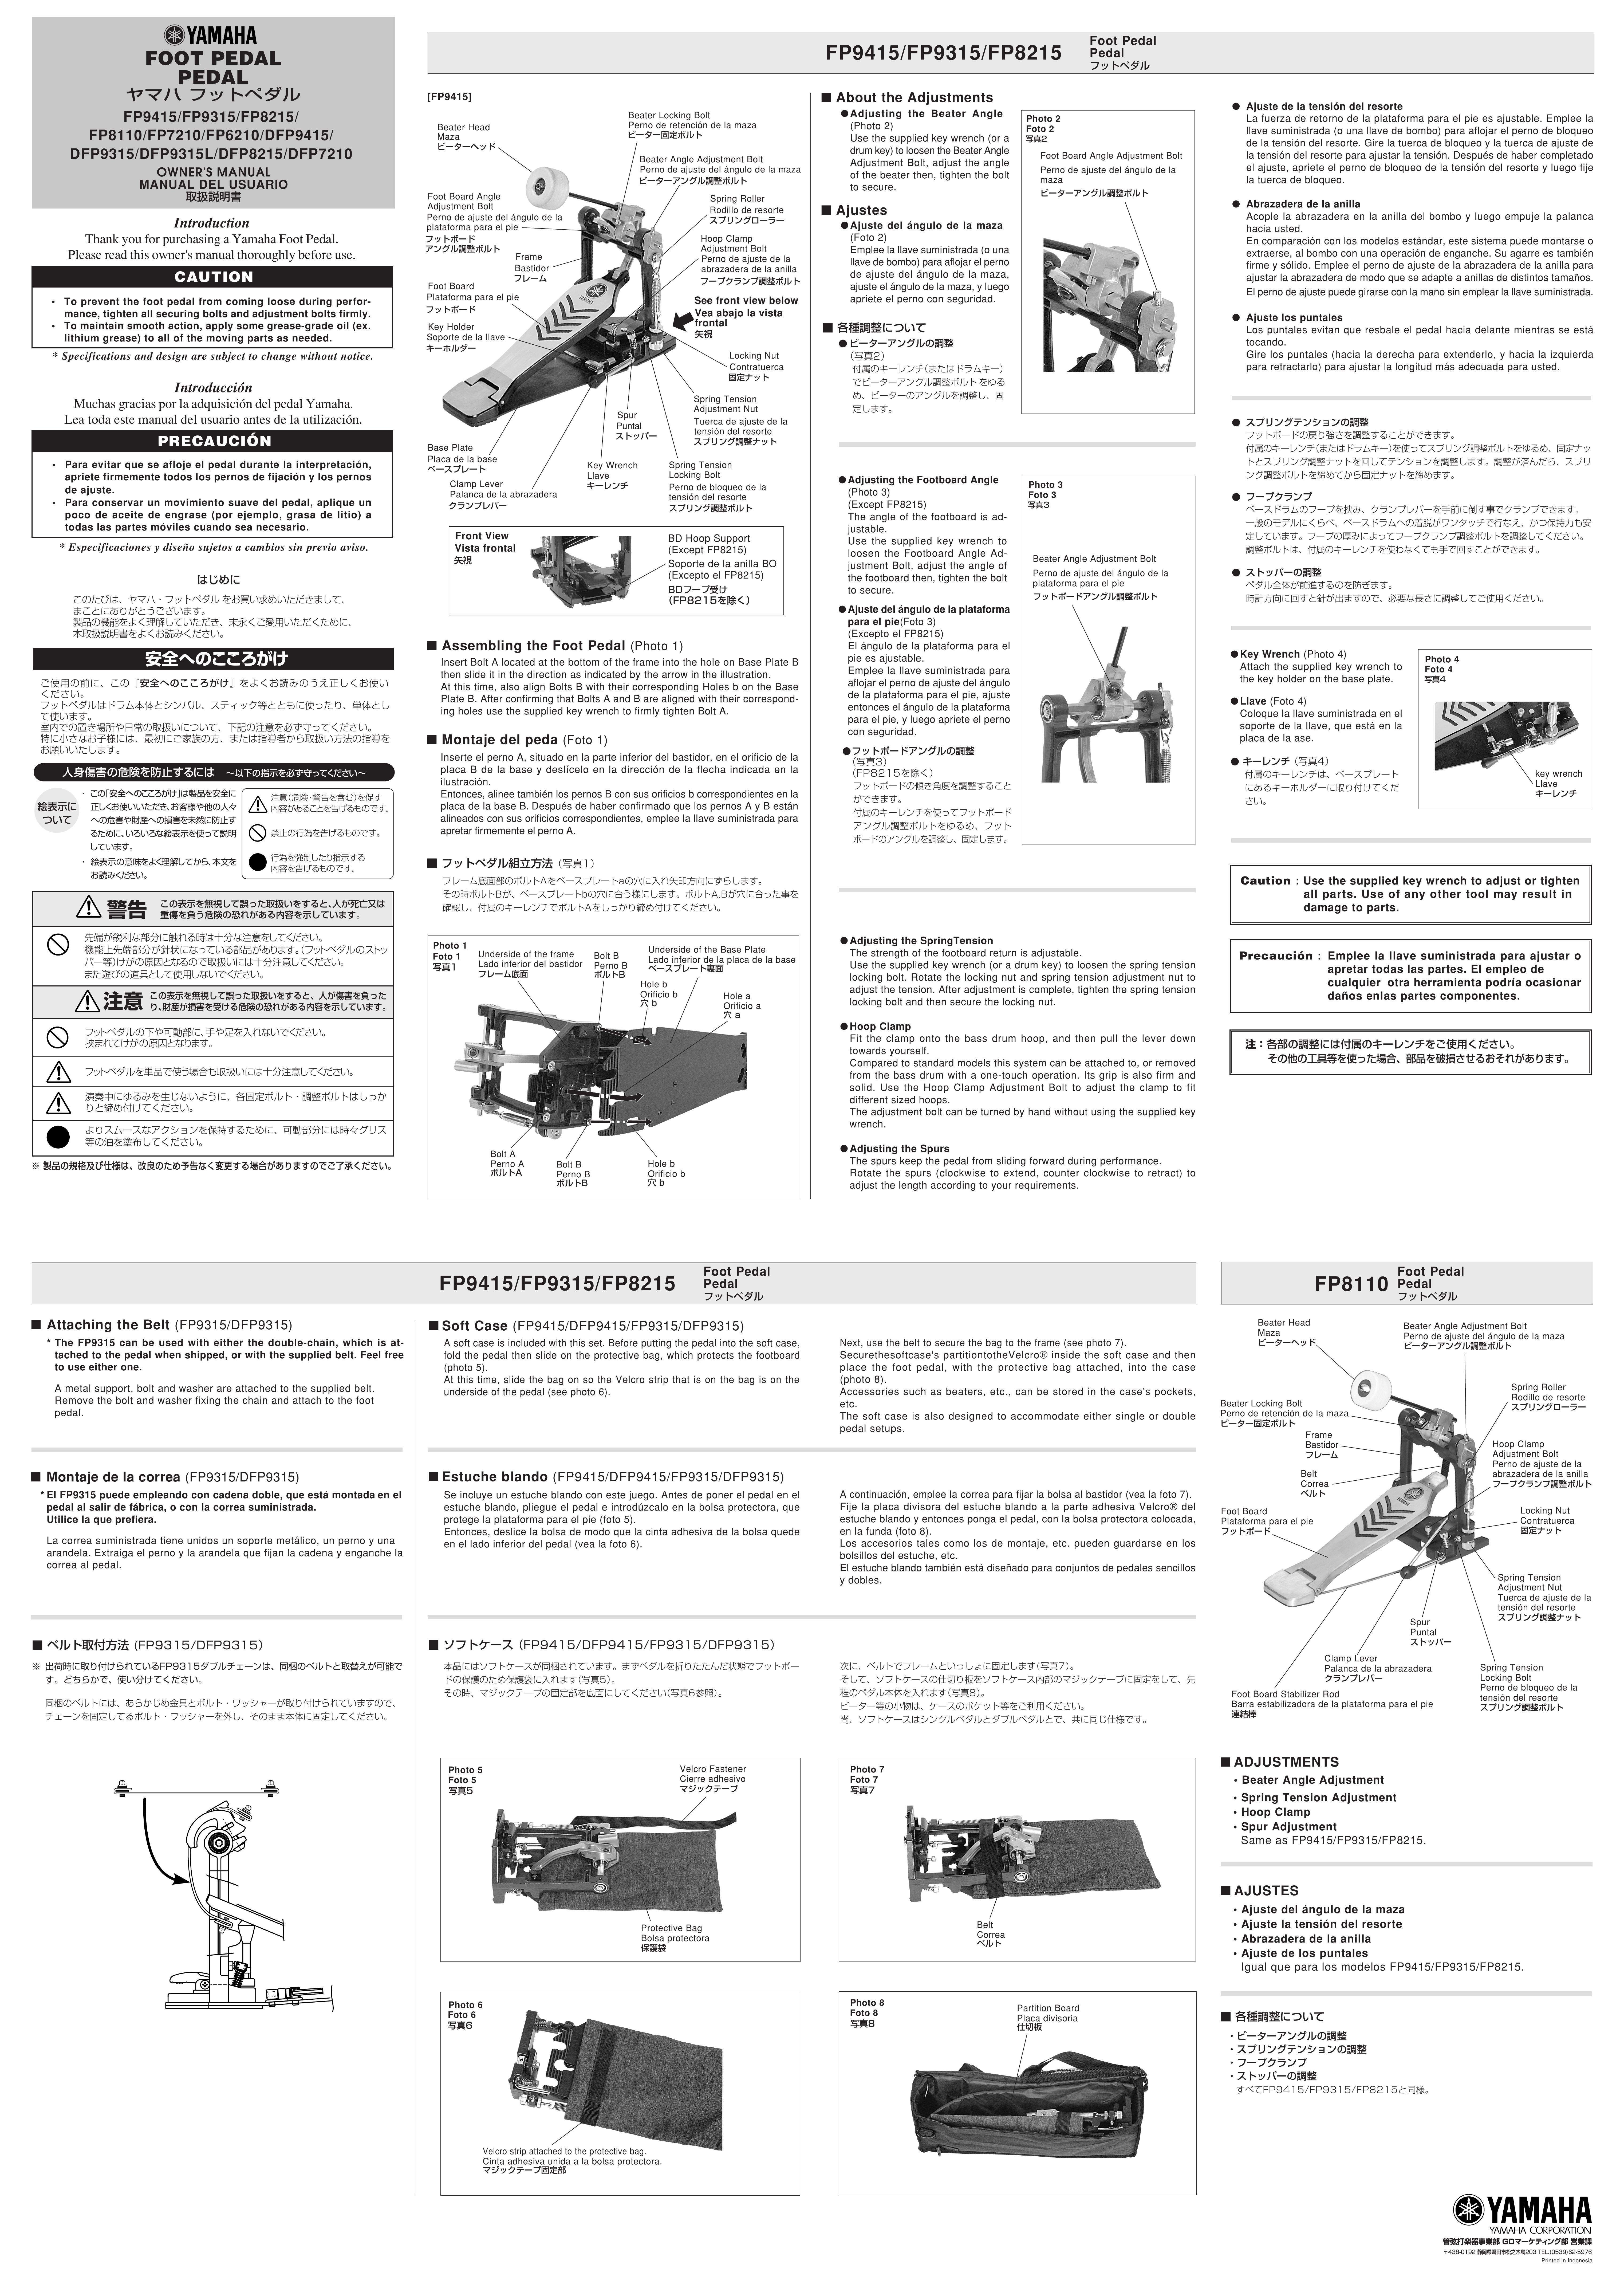 Yamaha FP9315 Music Pedal User Manual